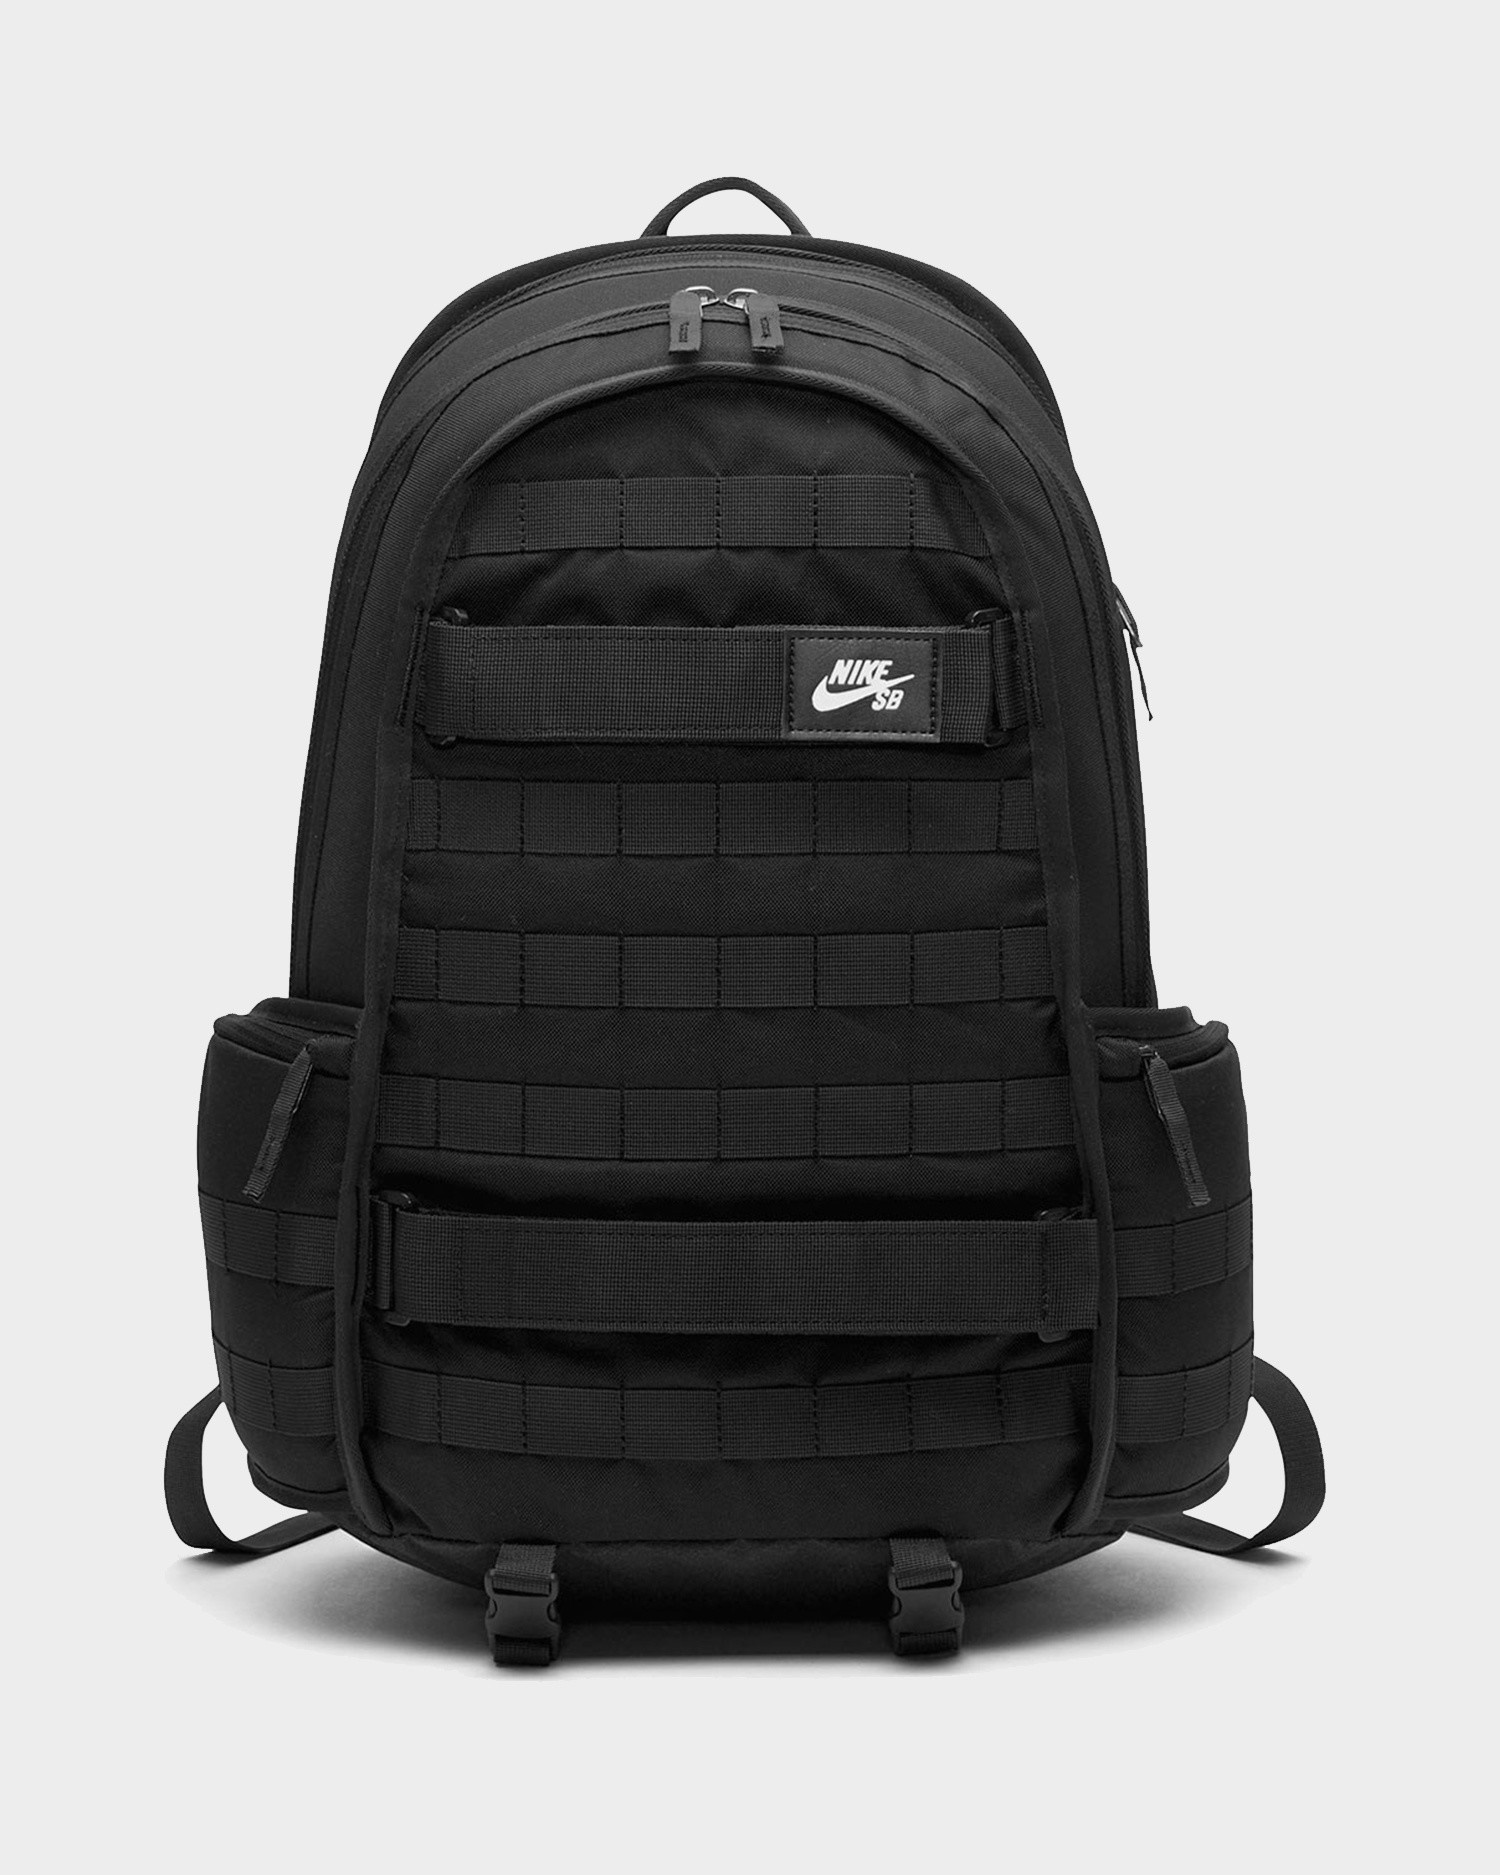 Copy of Nike SB RPM Backpack LT Armory 